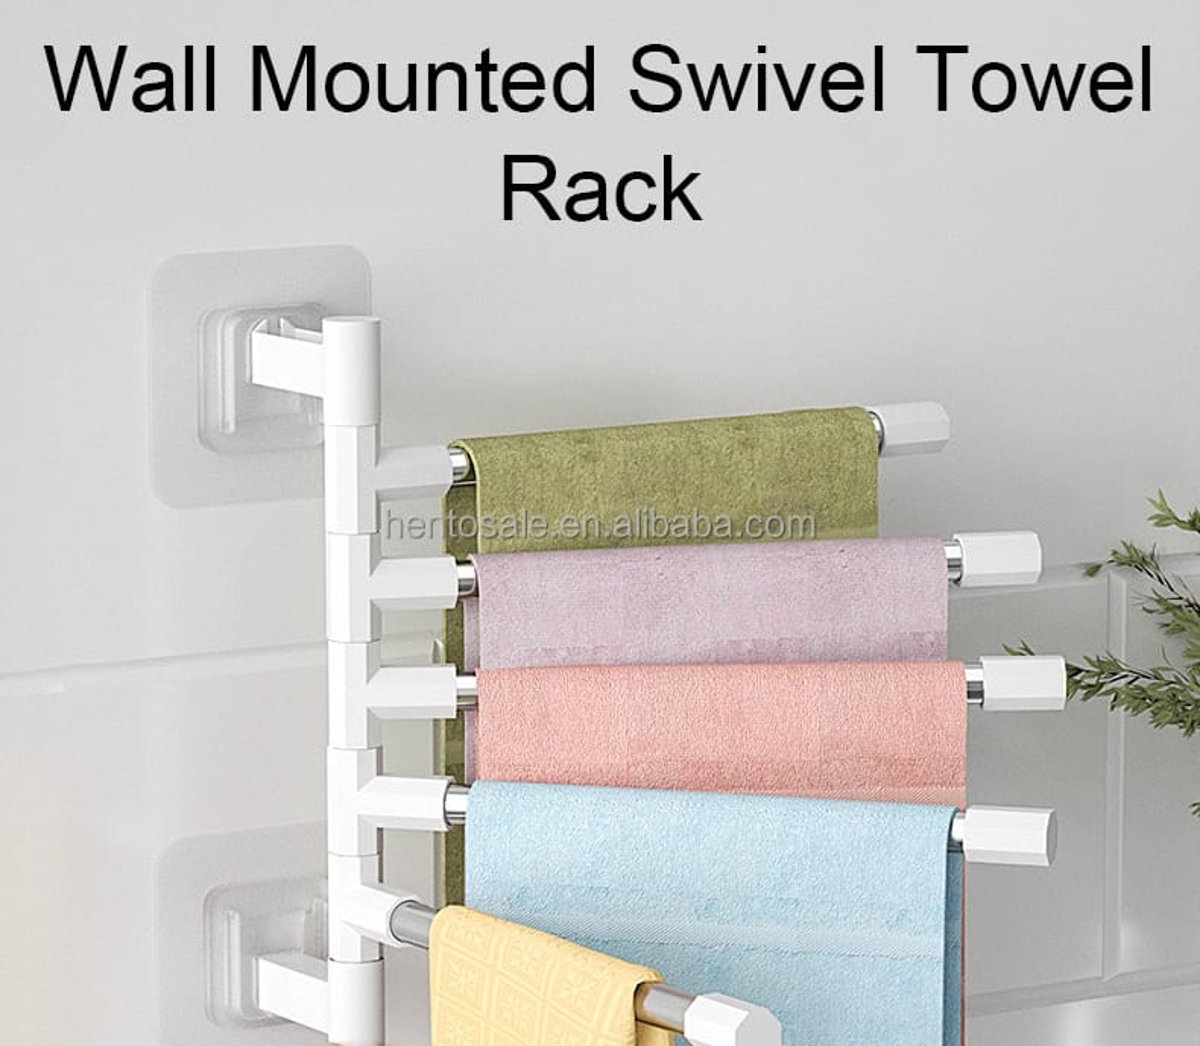 Wall-Mounted Swivel Storage Rack